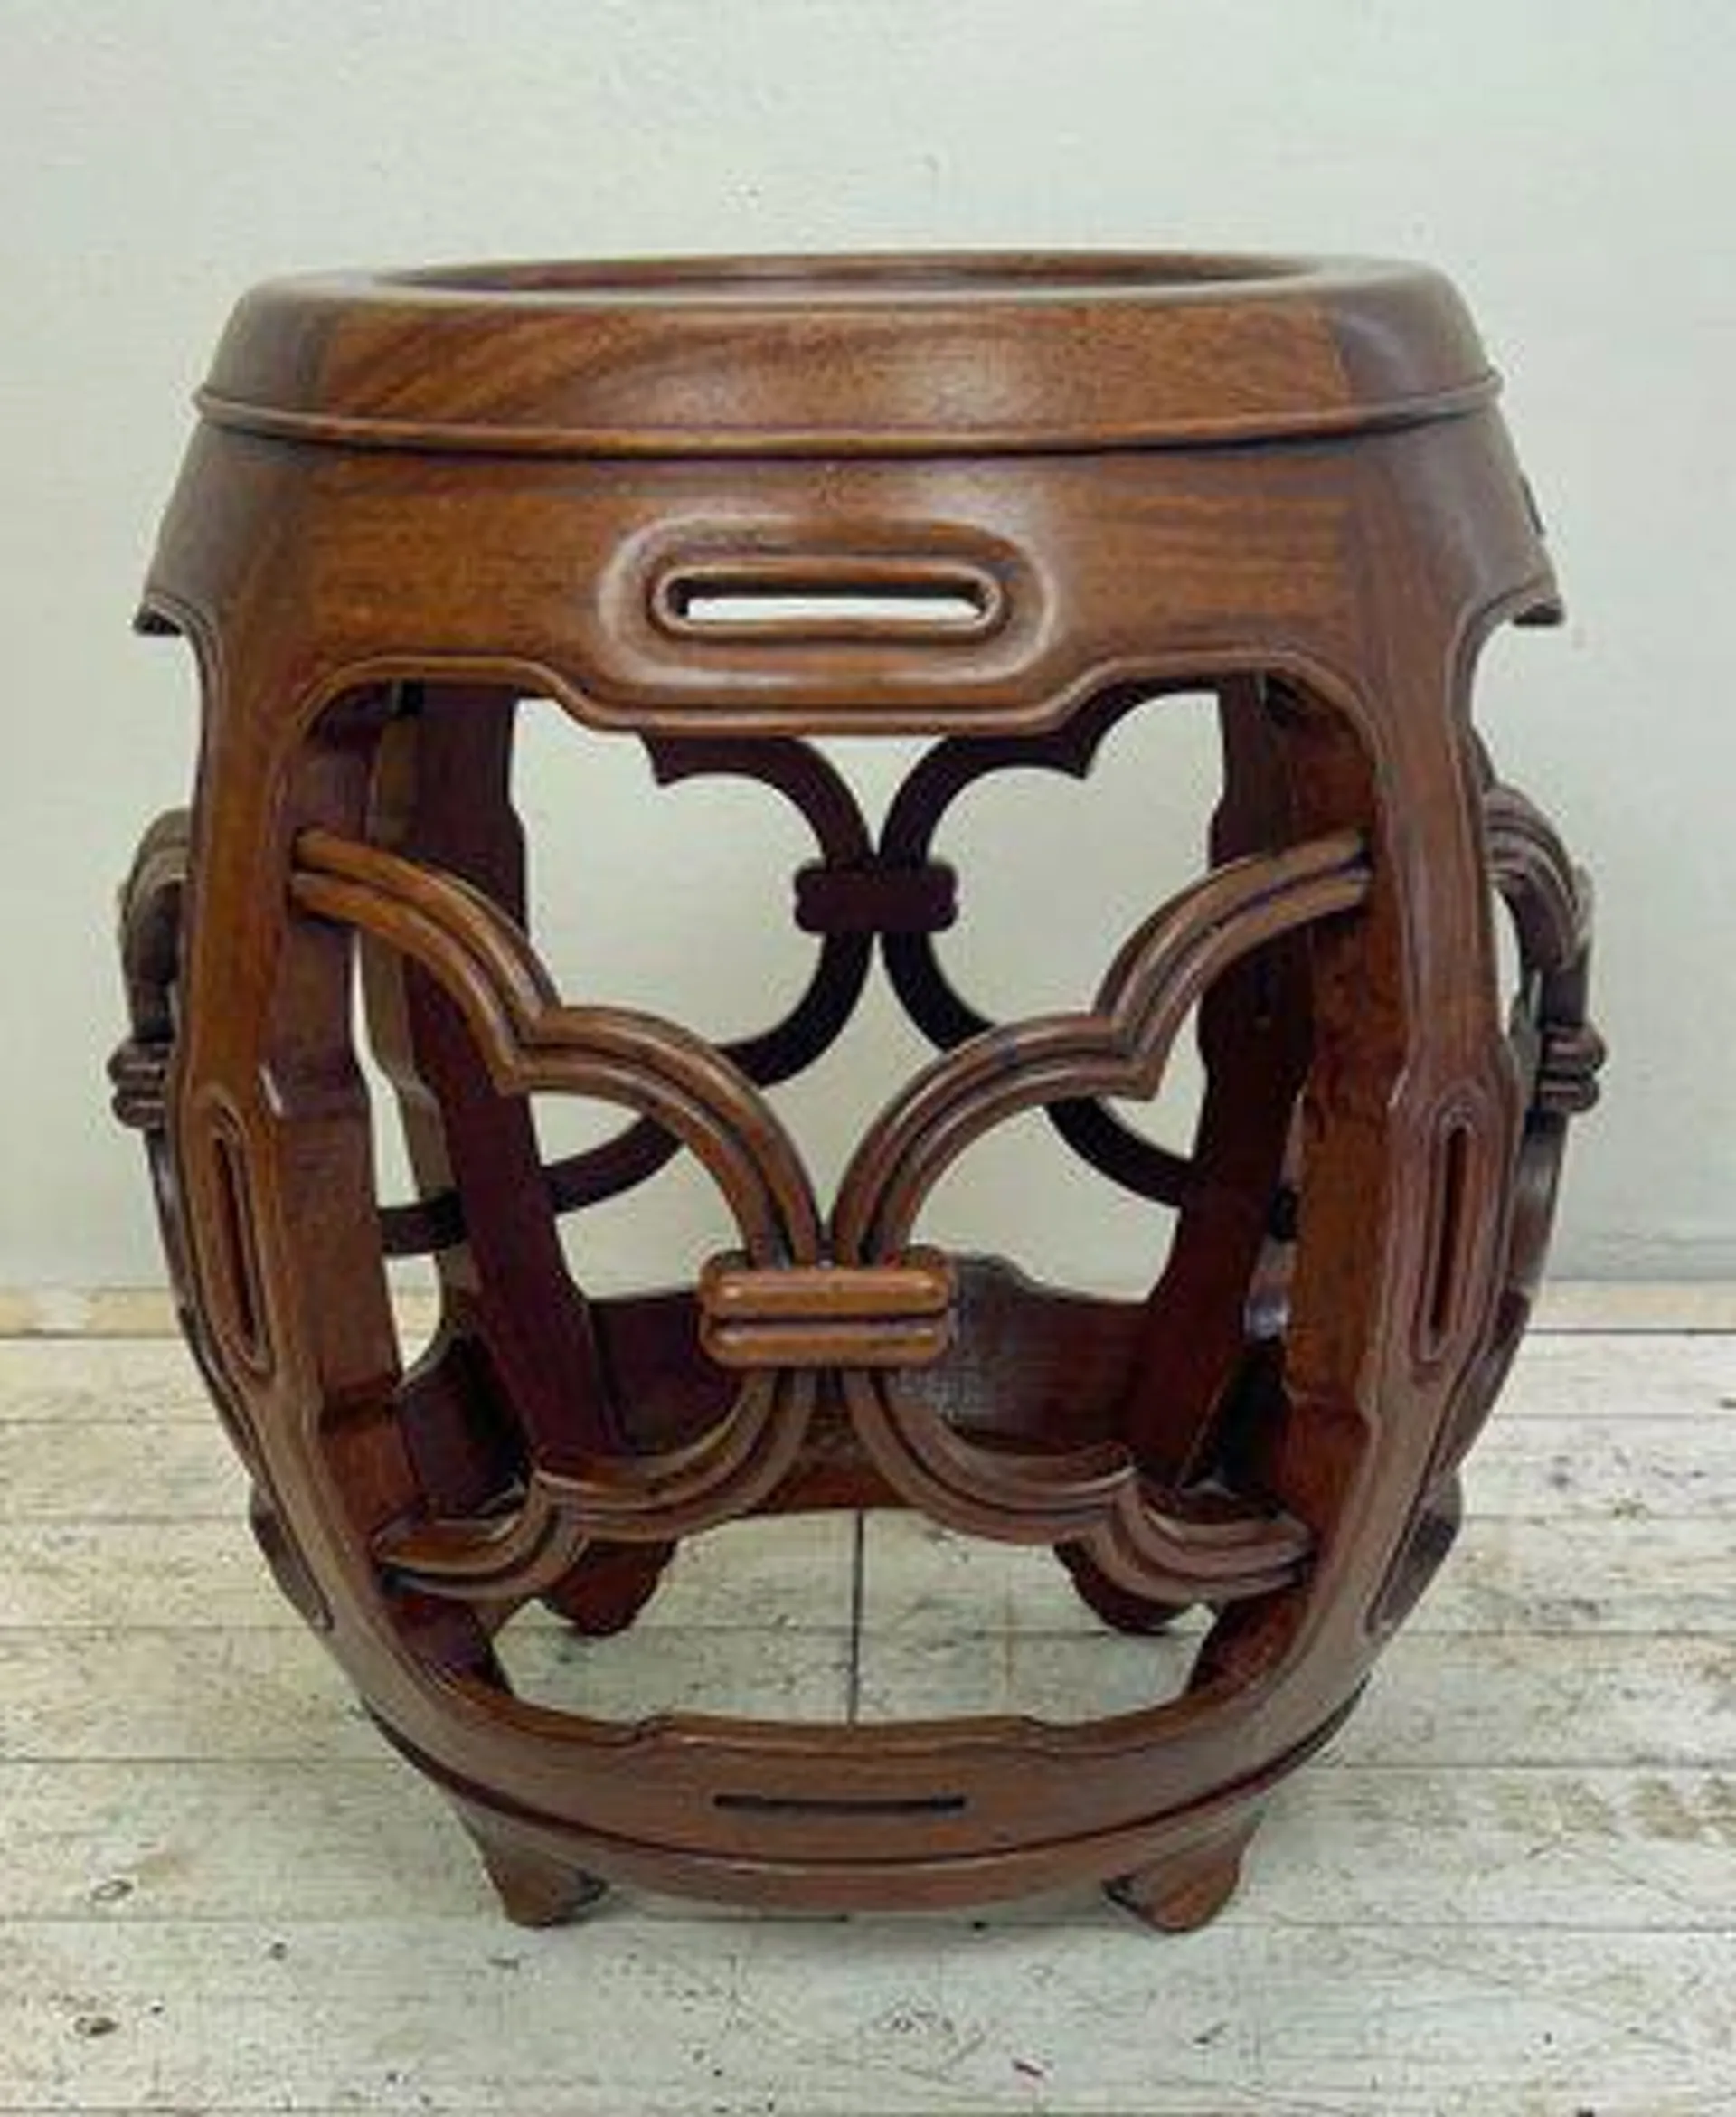 Chinese Hongmu Style Carved Hardwood Drum Stool, 1950s